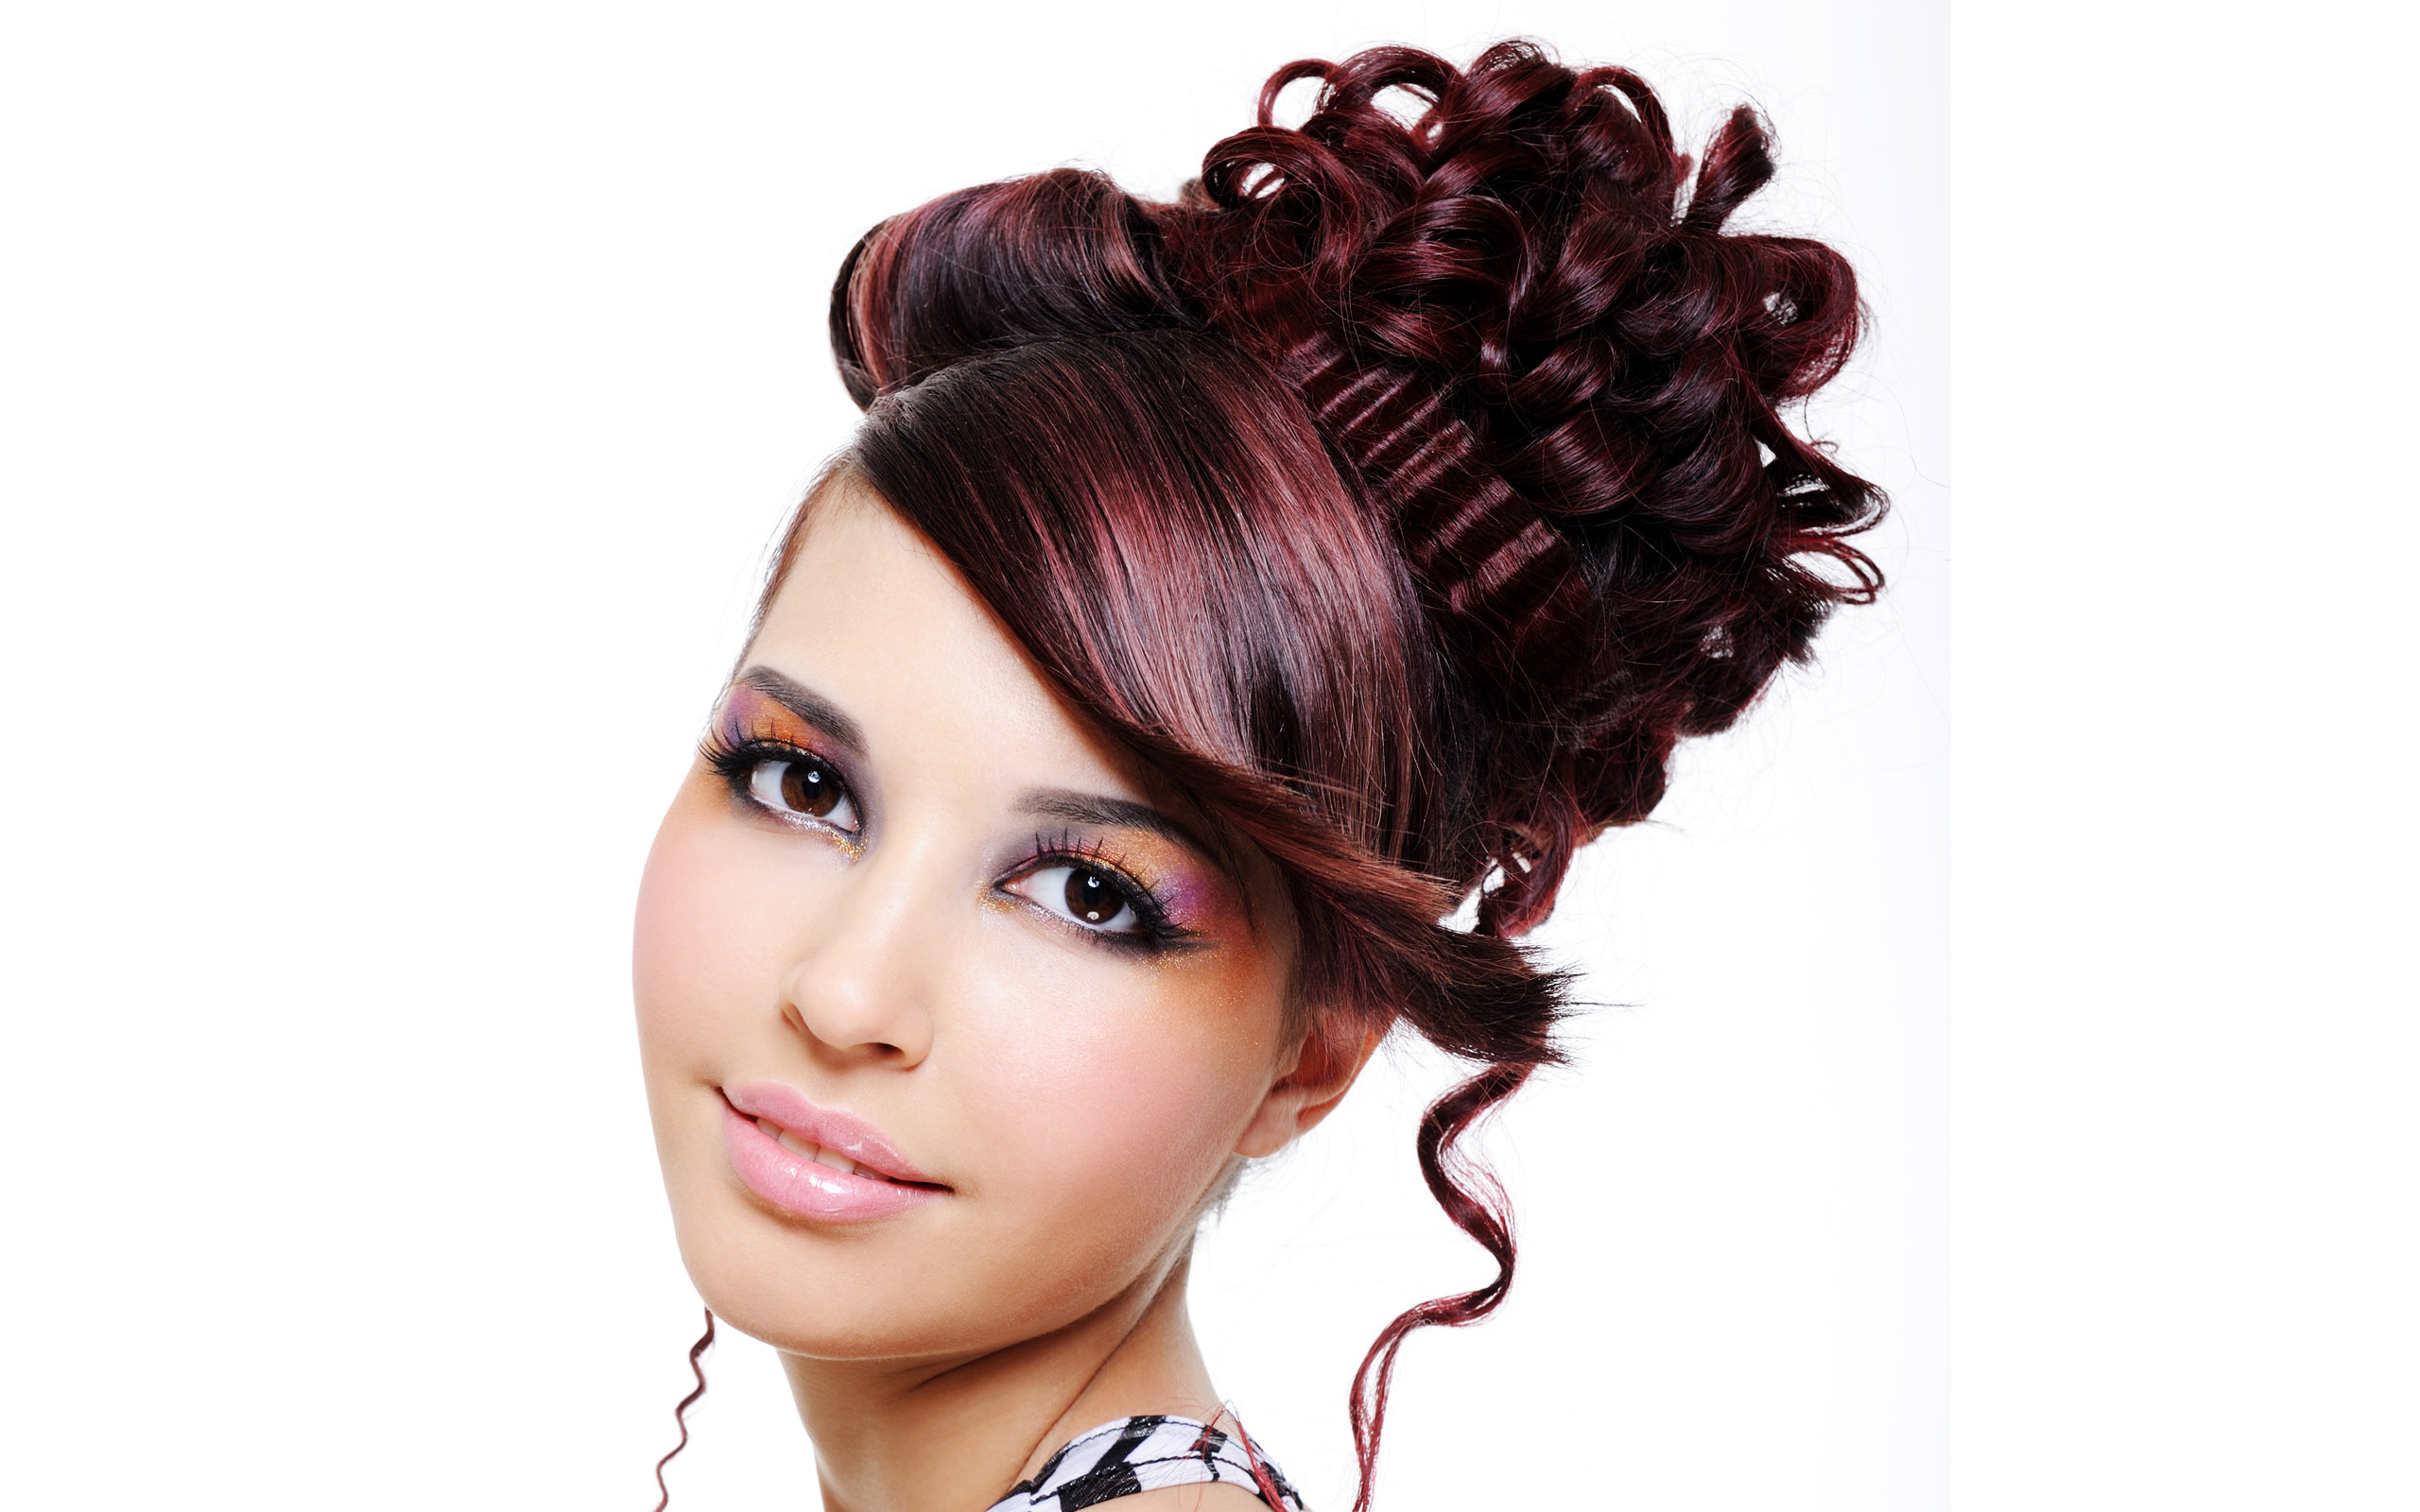 Female Hairstyles Images Hair Styles | Medium Hair Styles Ideas - 42759